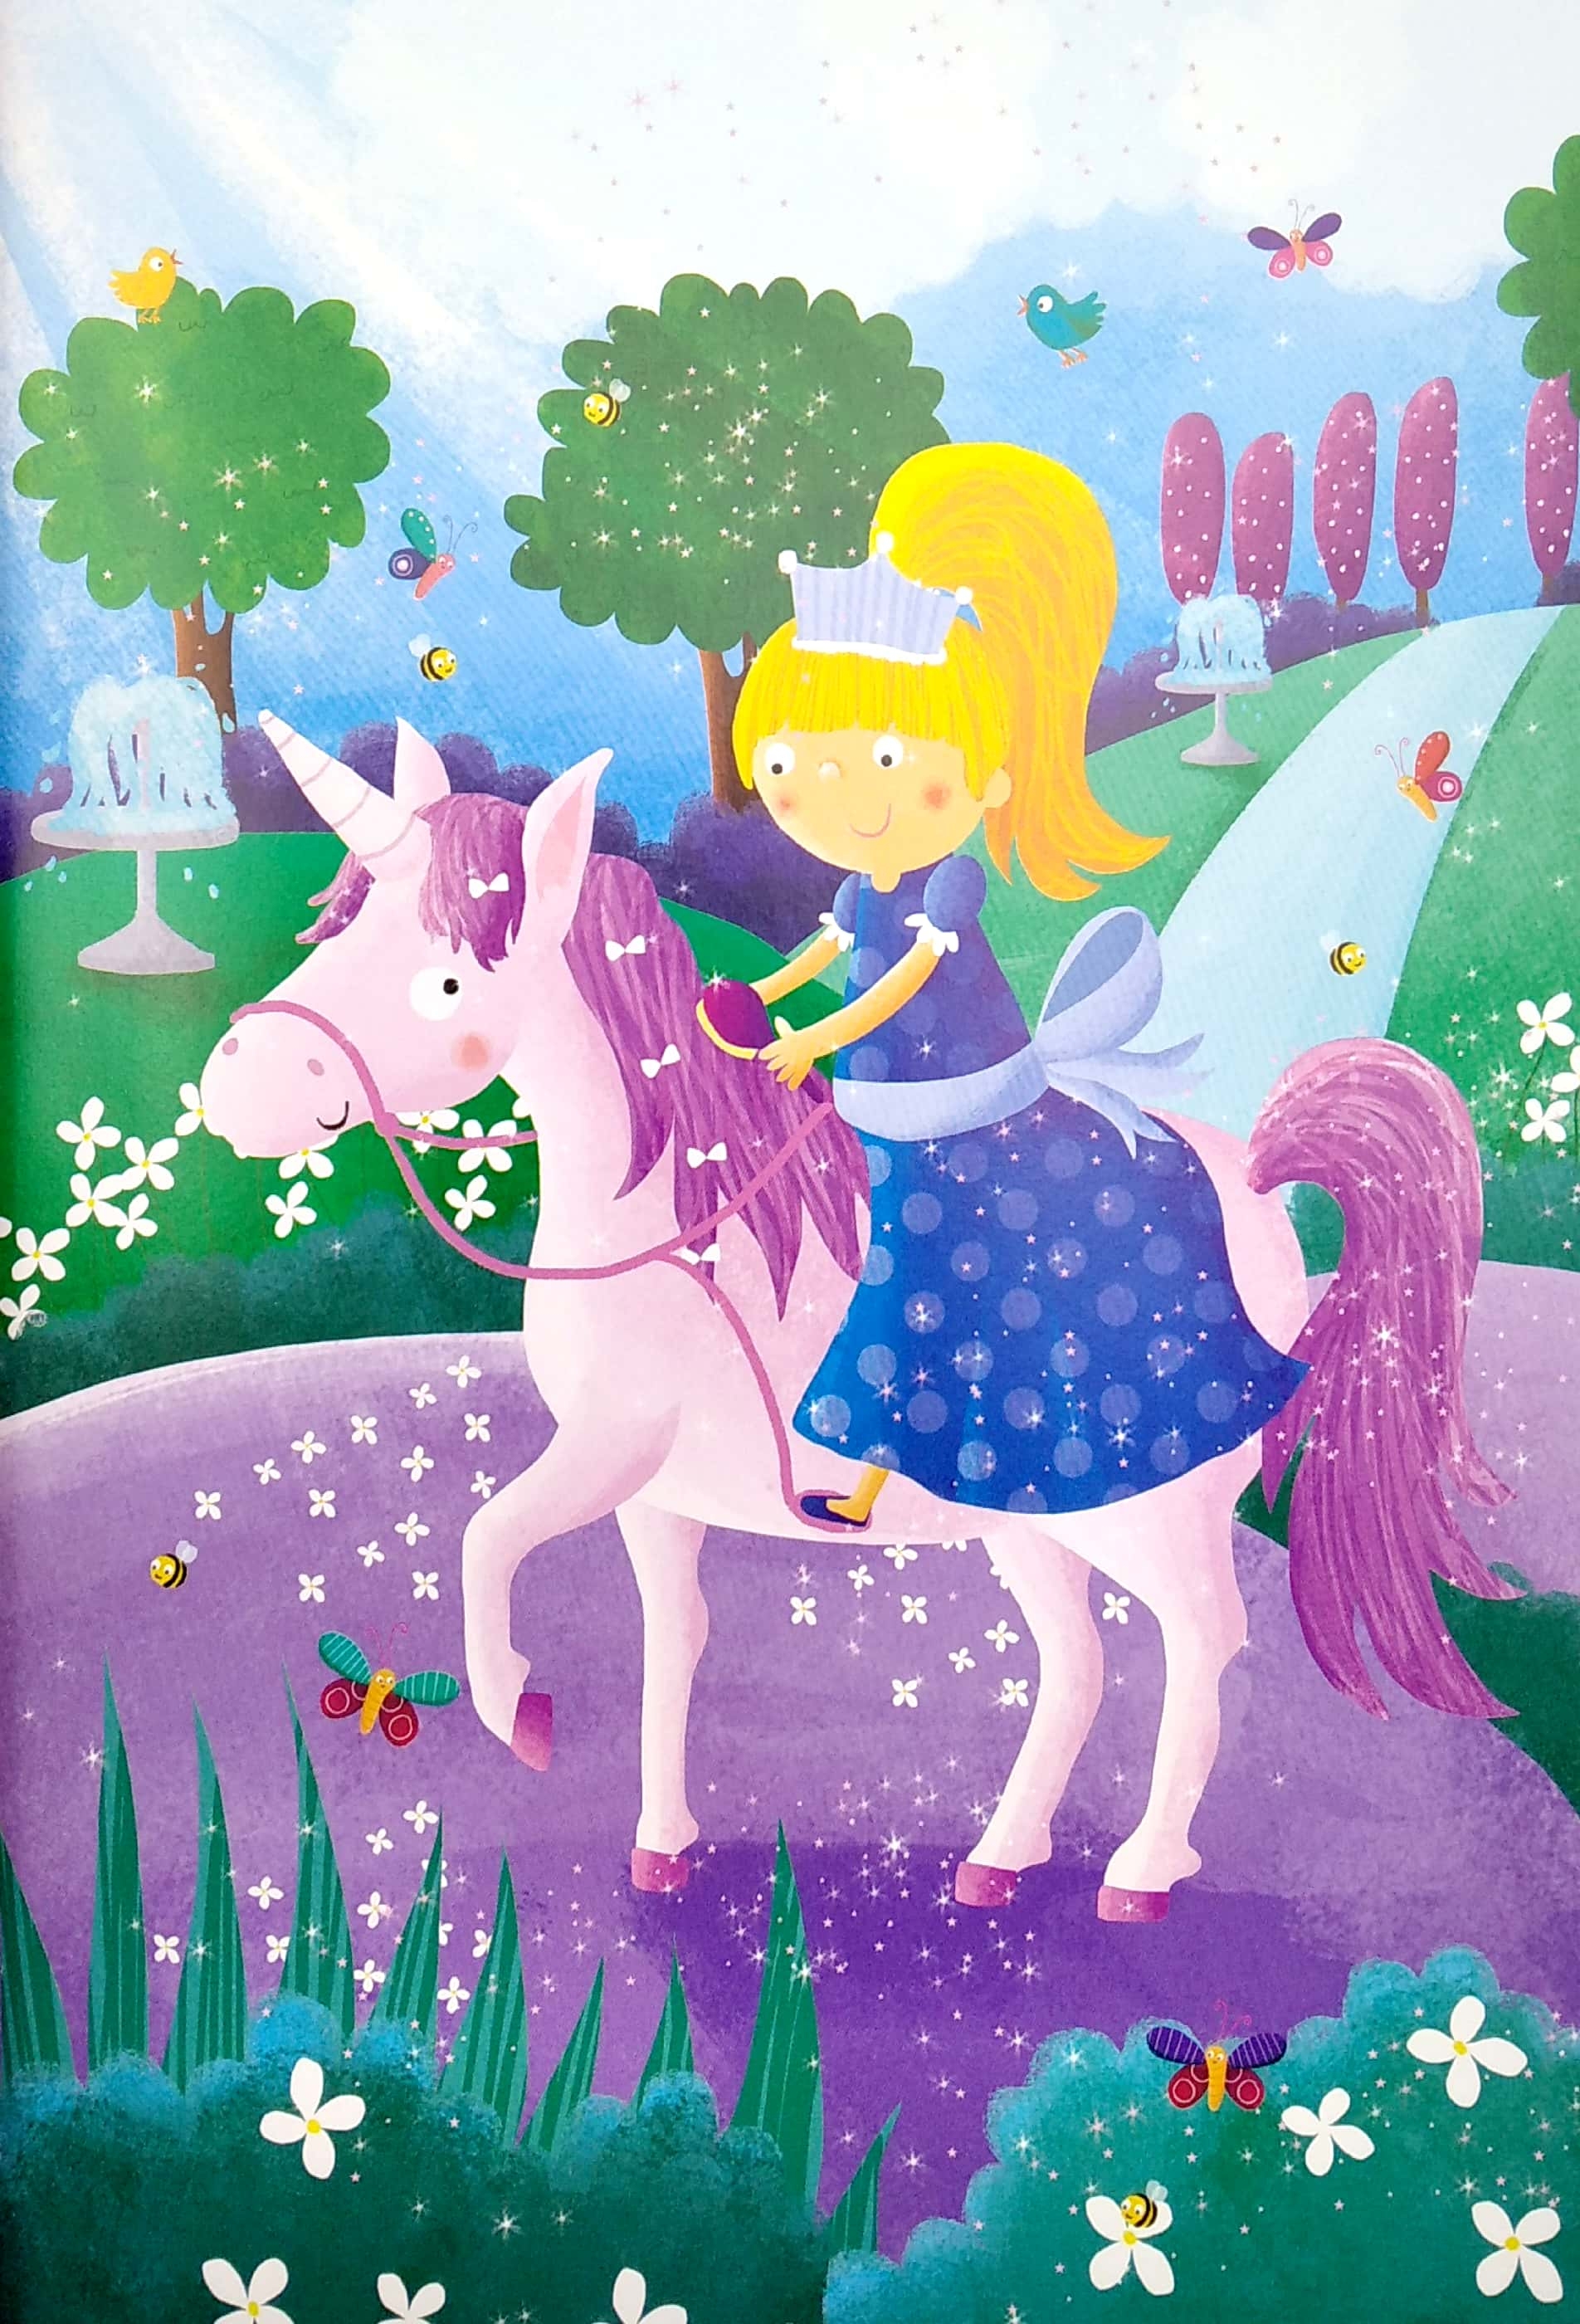 I Love Magical Princess Stories